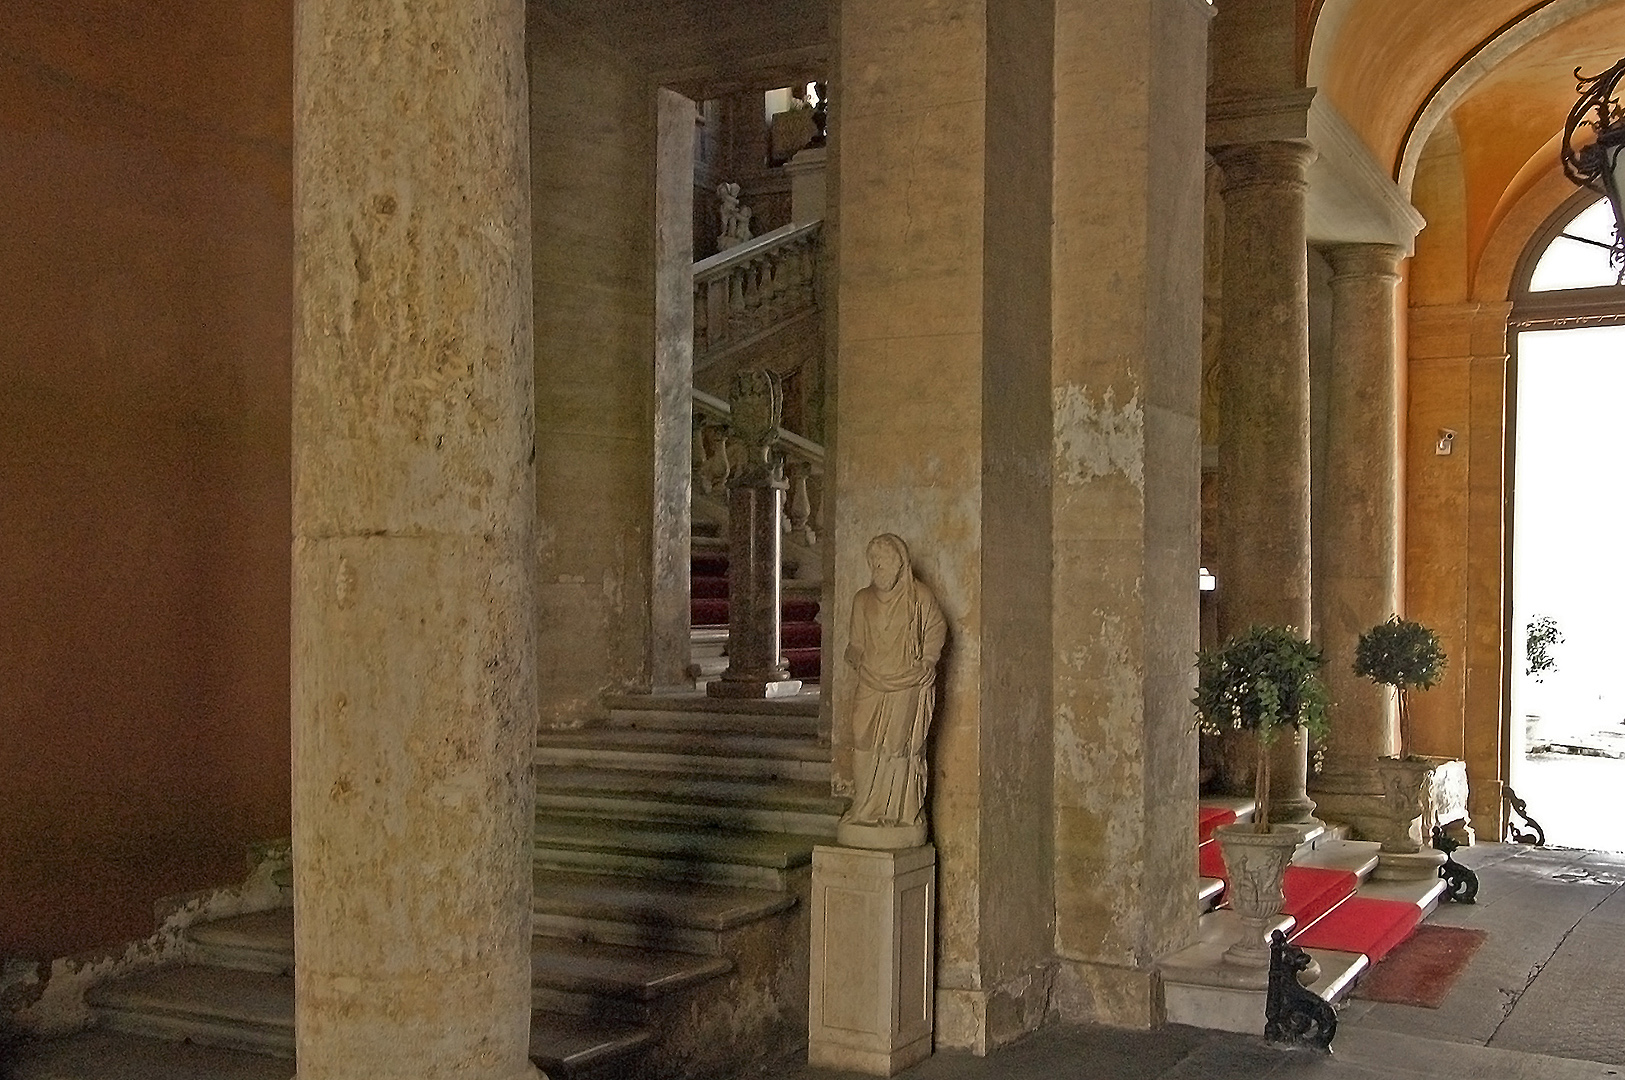 Entree van een palazzo in Rome.; Entrance of a Roman palazzo.